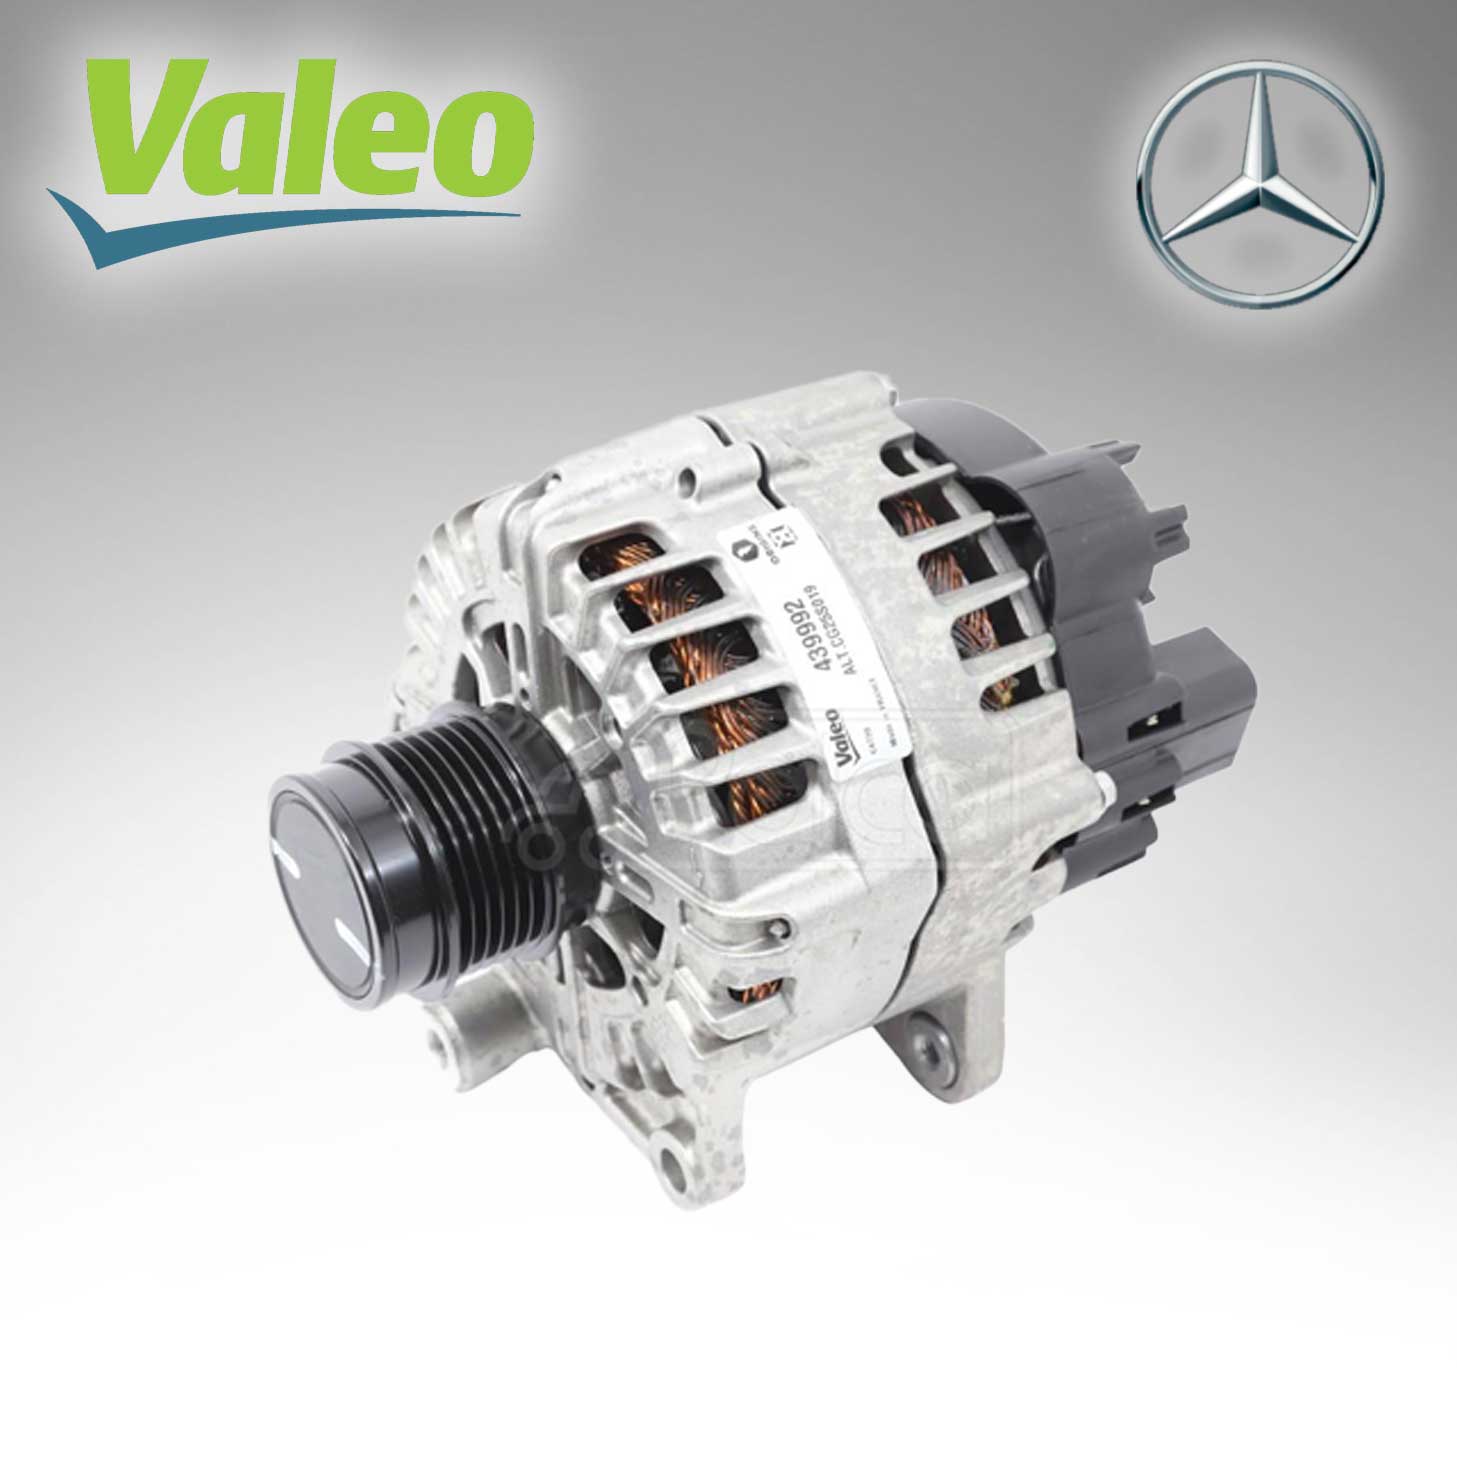 Valeo ALTERNATOR 250AH W213 (2017-18) E300 (Val#439992) For Mercedes Benz 0009066906